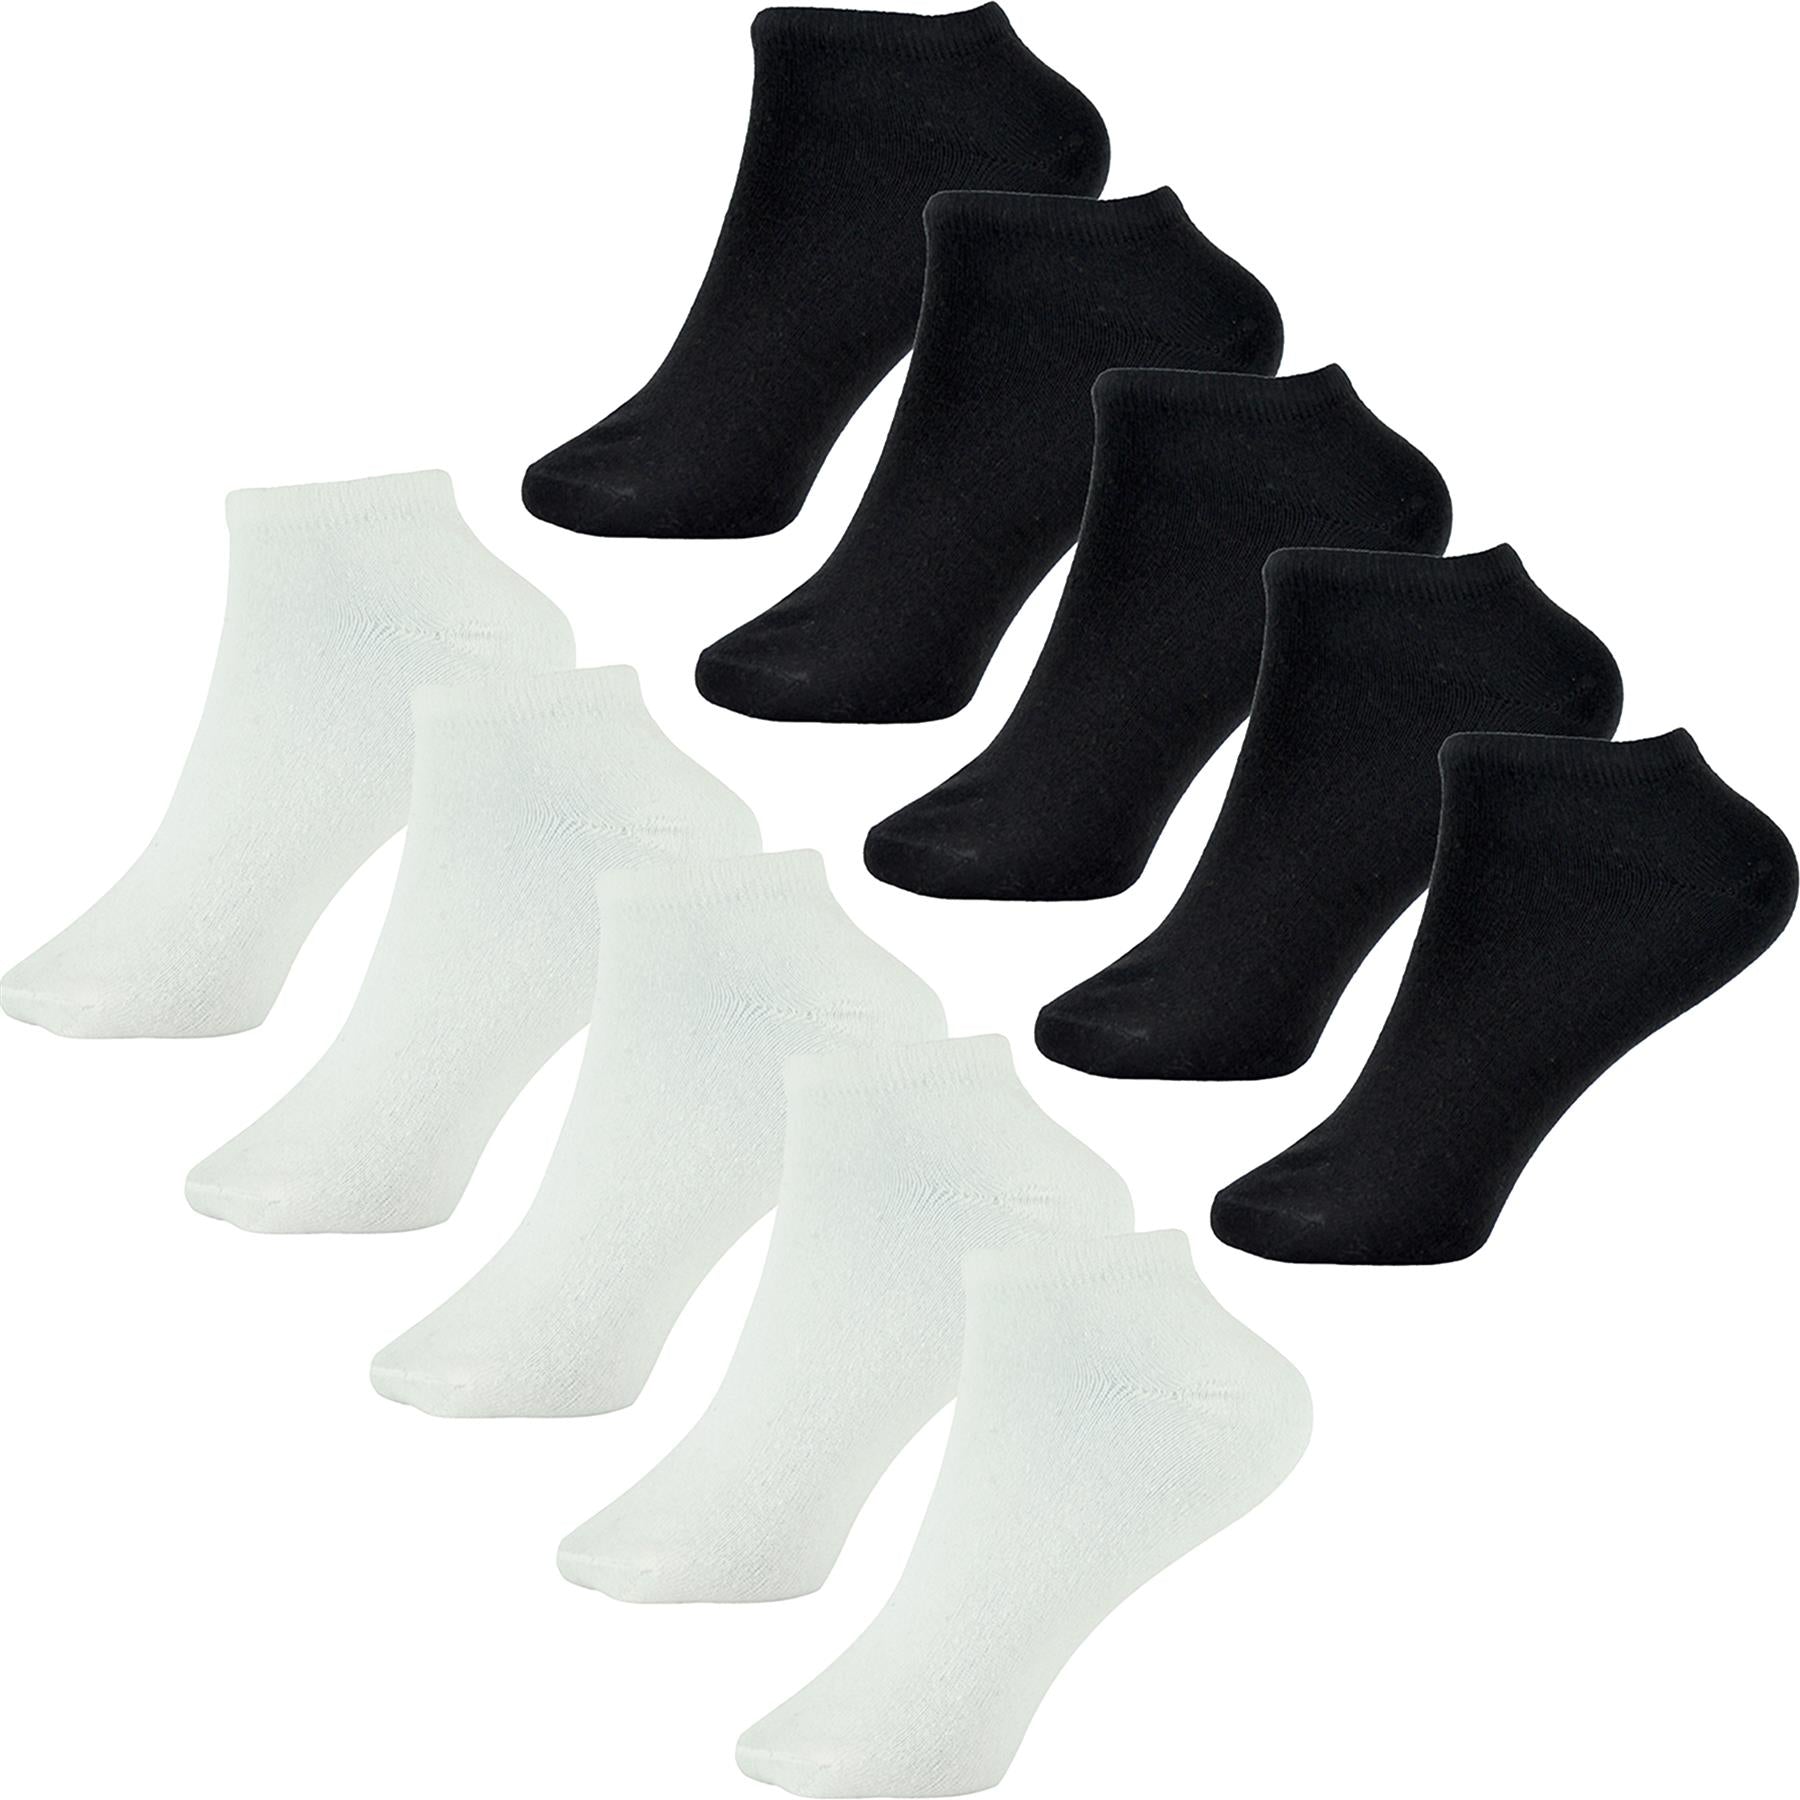 Ladies Plain Trainer Socks Low Cut Cotton Pack of 5 Stylish Woman Ankle Socks